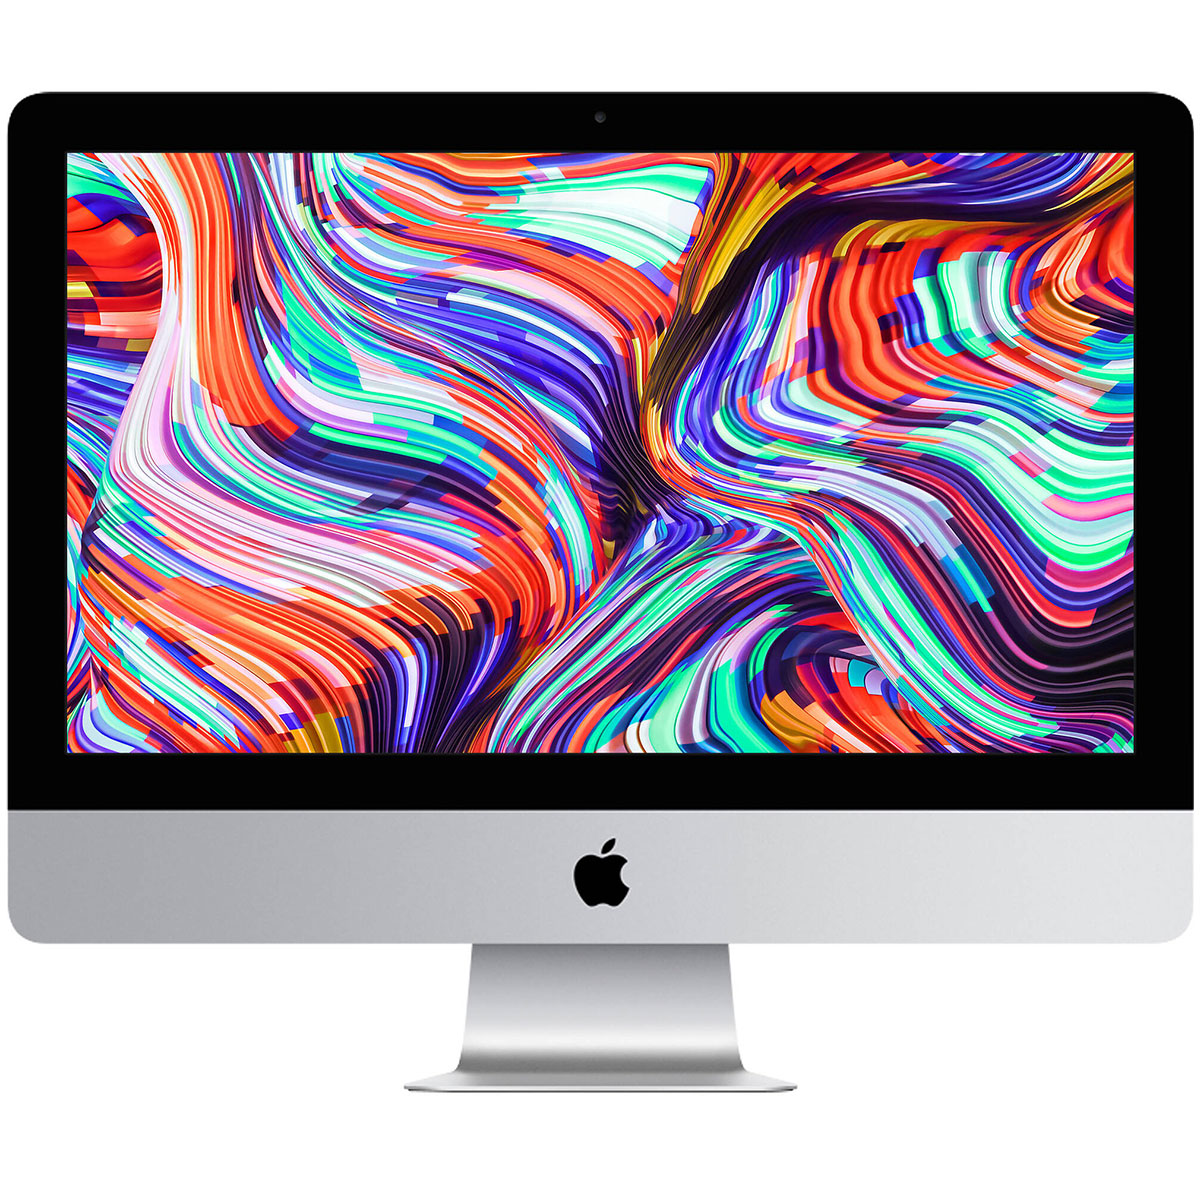 Ordi Apple iMac ALL-IN-ONE 2020 Core i5-10500 3.1GHz 256GB SSD 8GB